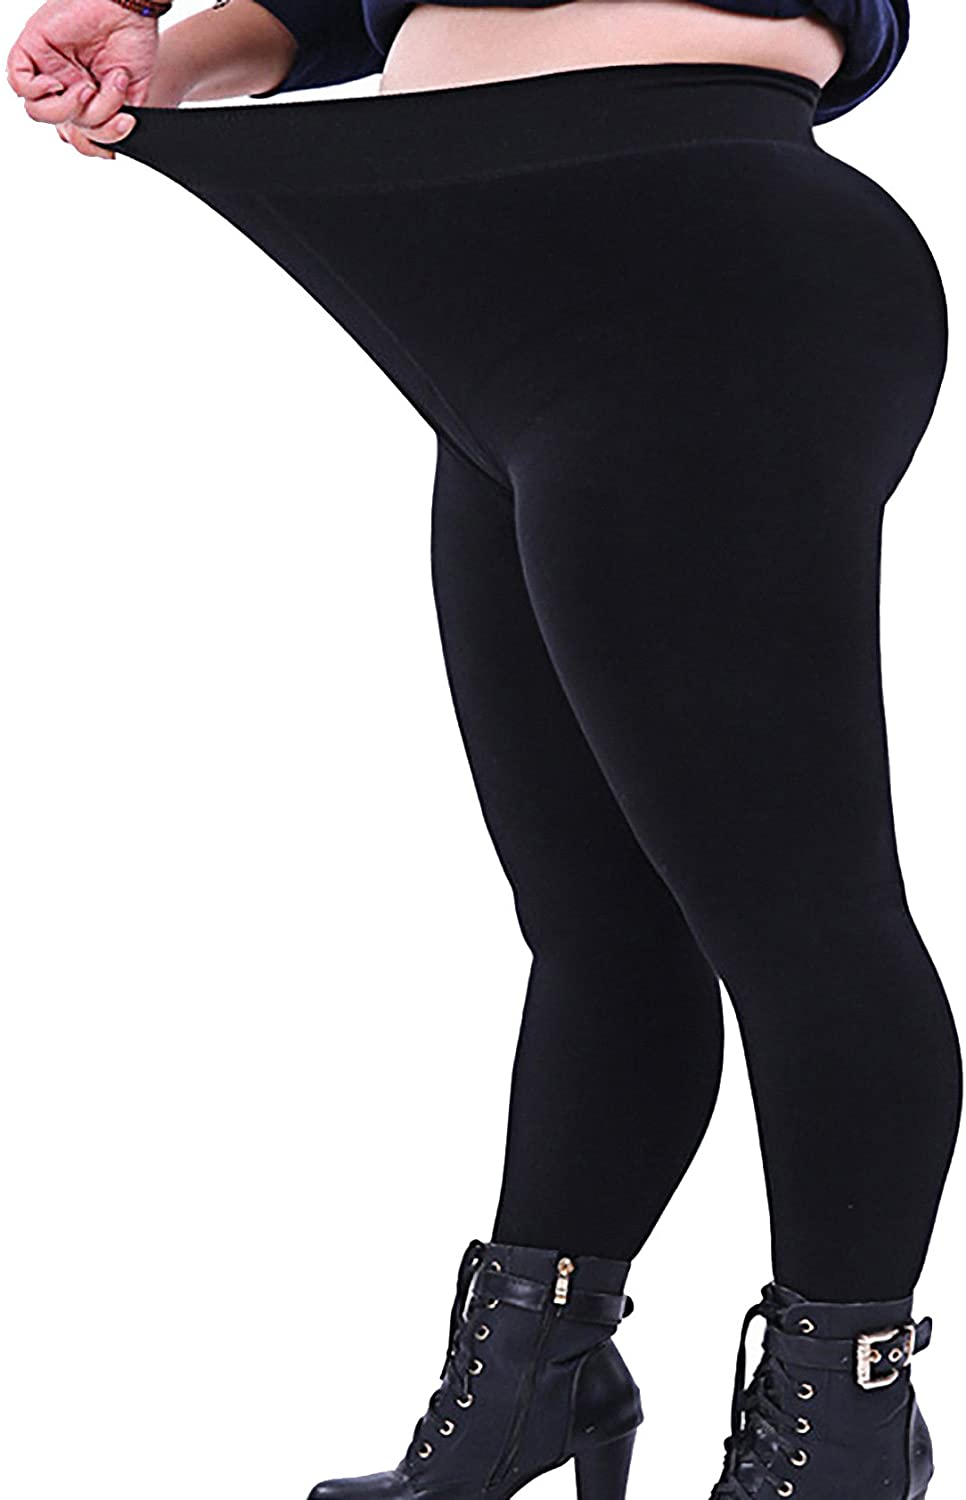 PLUS SIZE Leggings (XL-3XL) High Waist Stretch Leggings Pants Black for  women big size